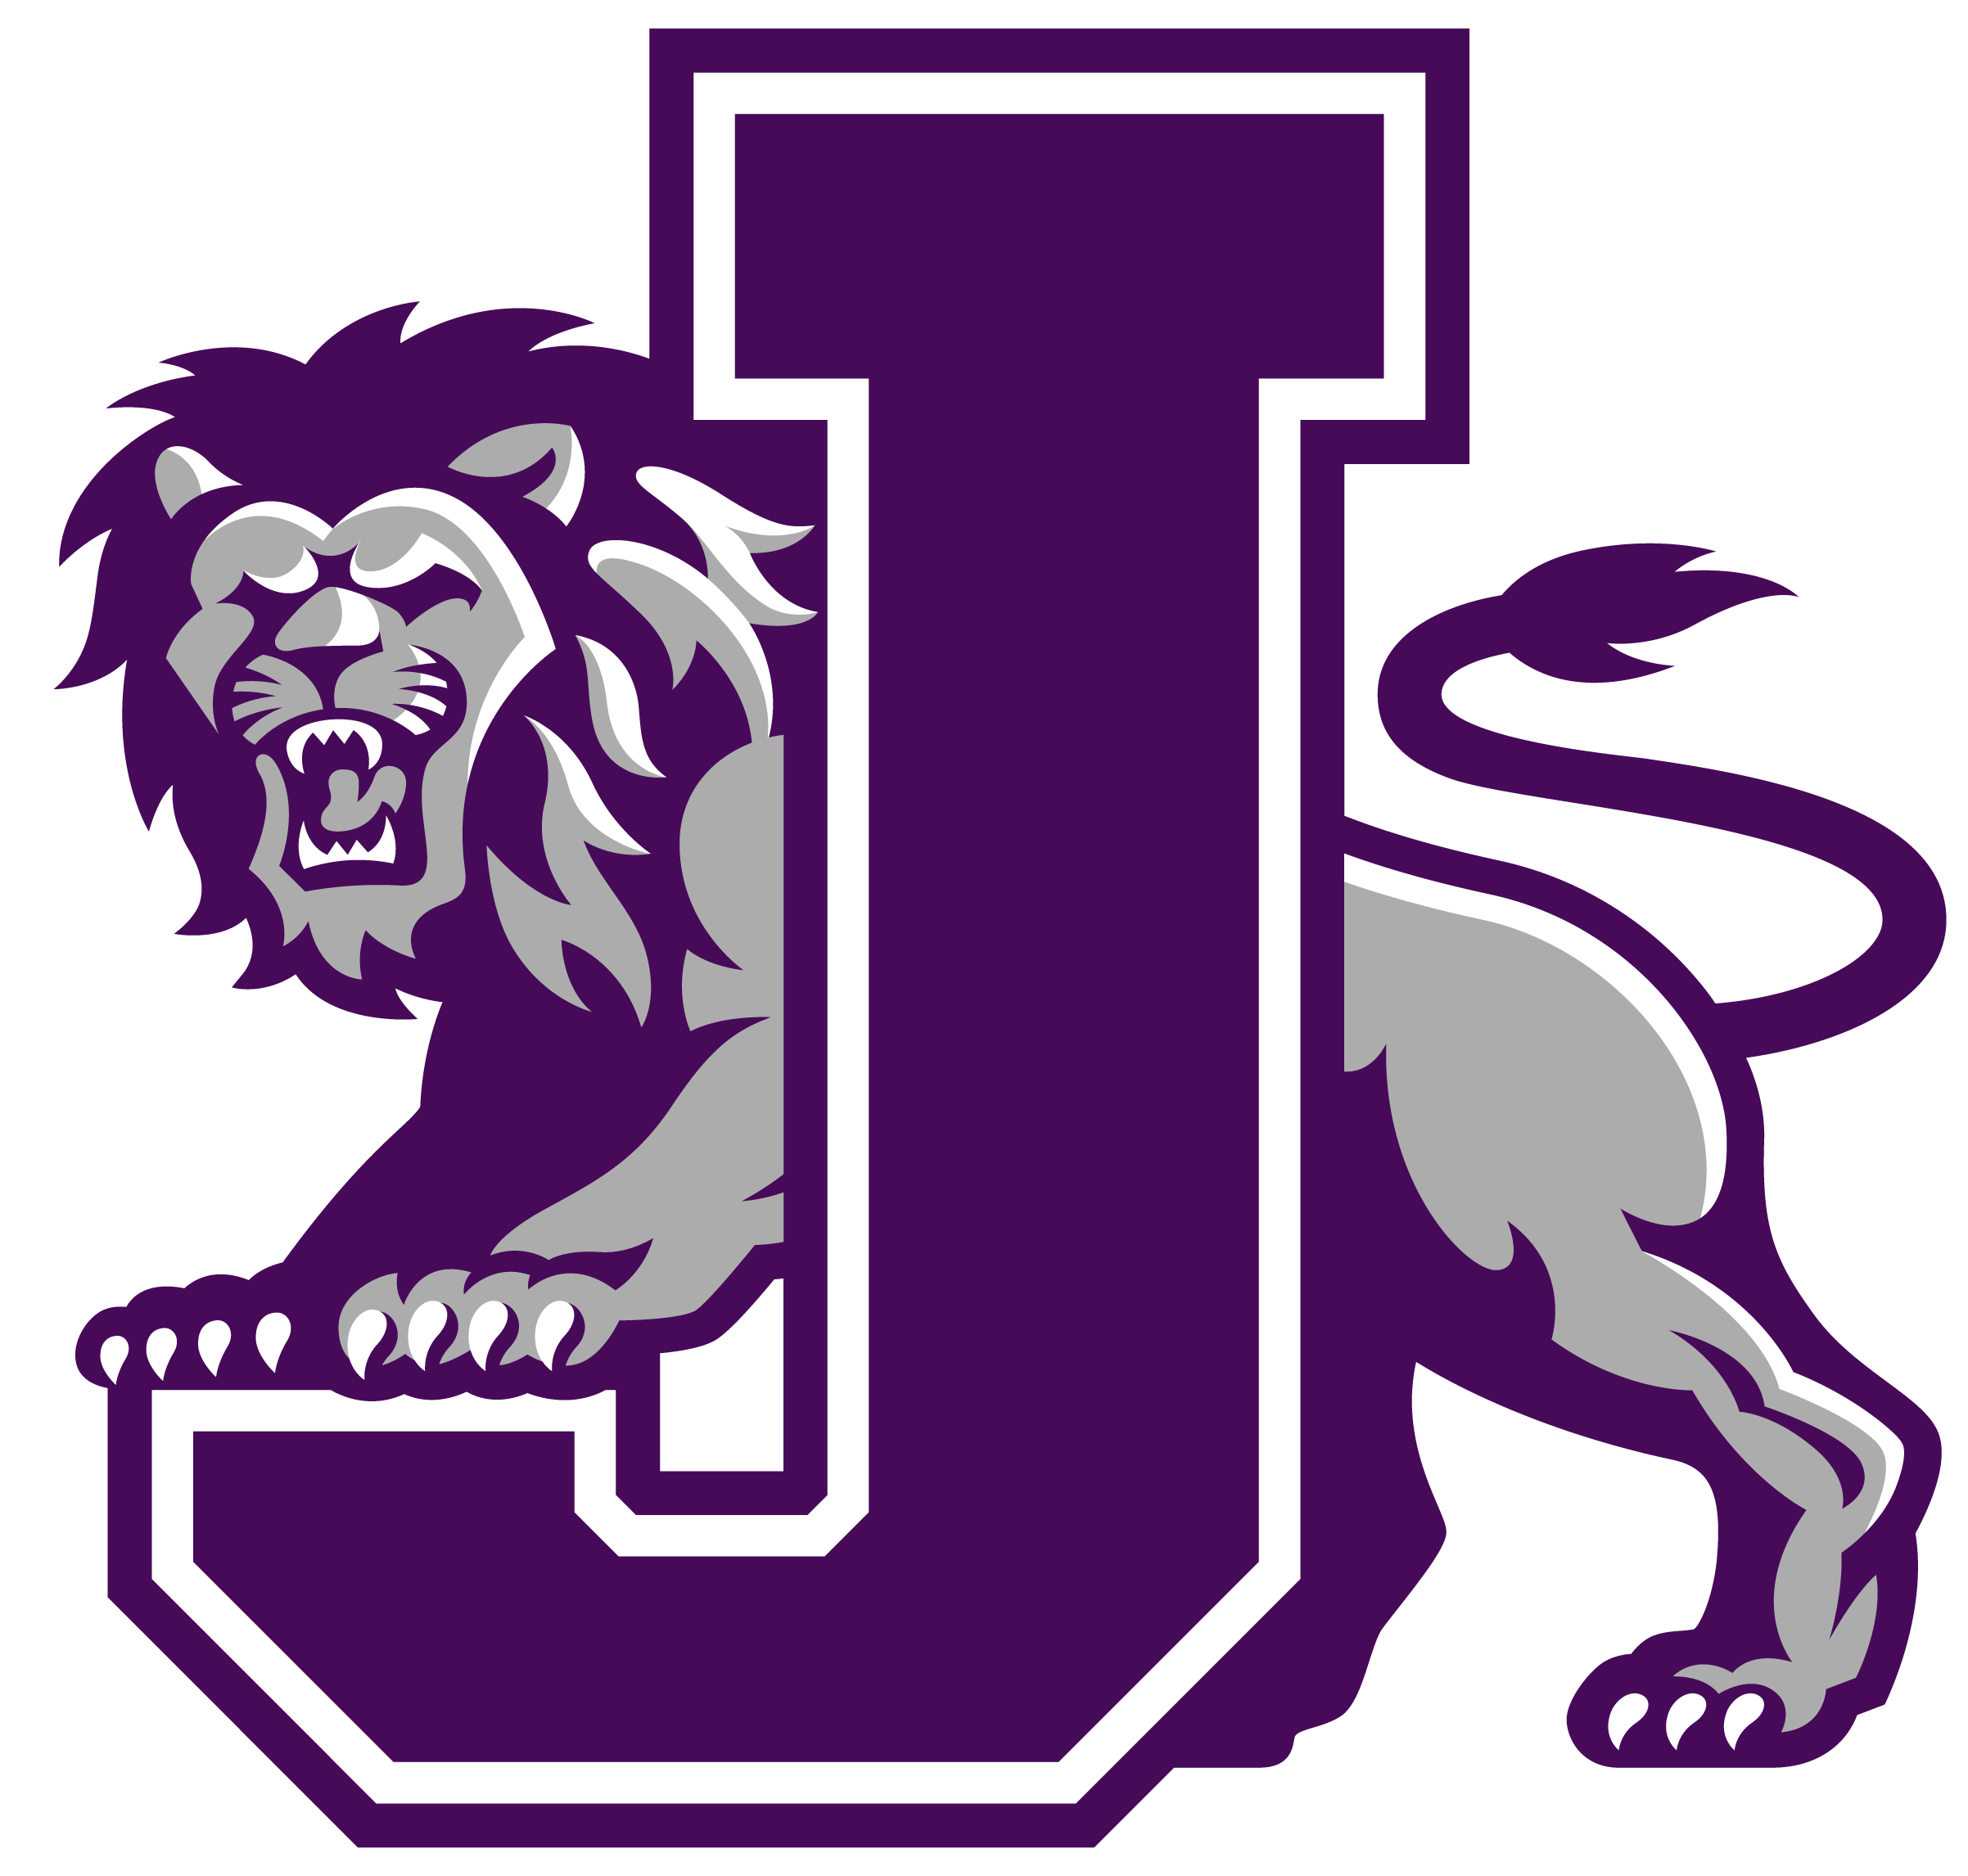 Lion School Logo - ORIGINAL (not copied) High School logos Logos